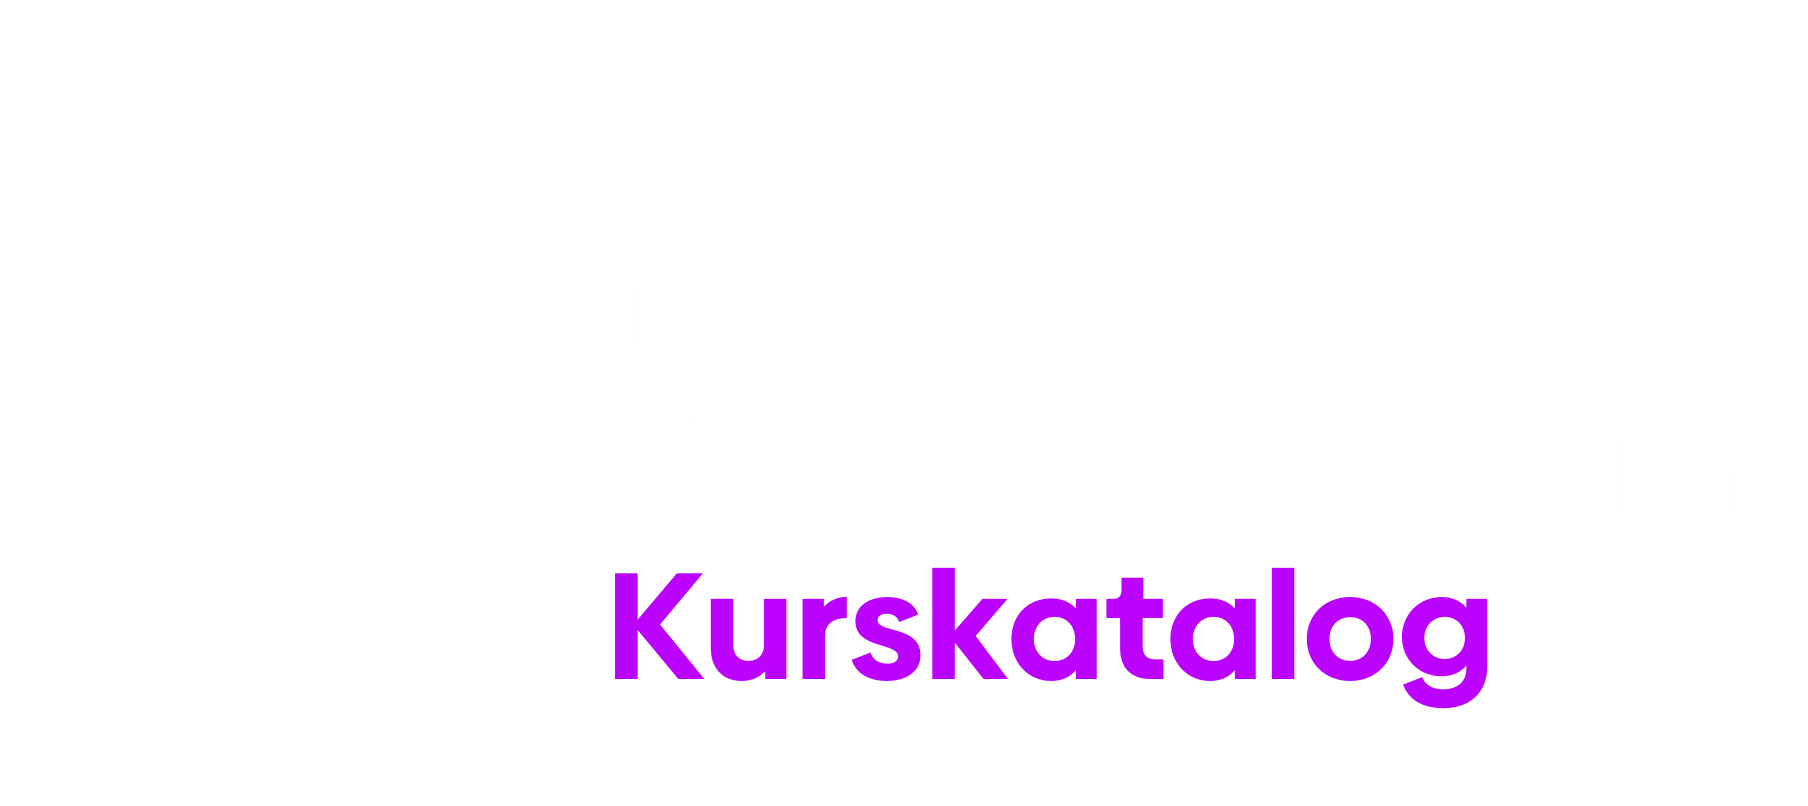 Nordiska Textilakademin